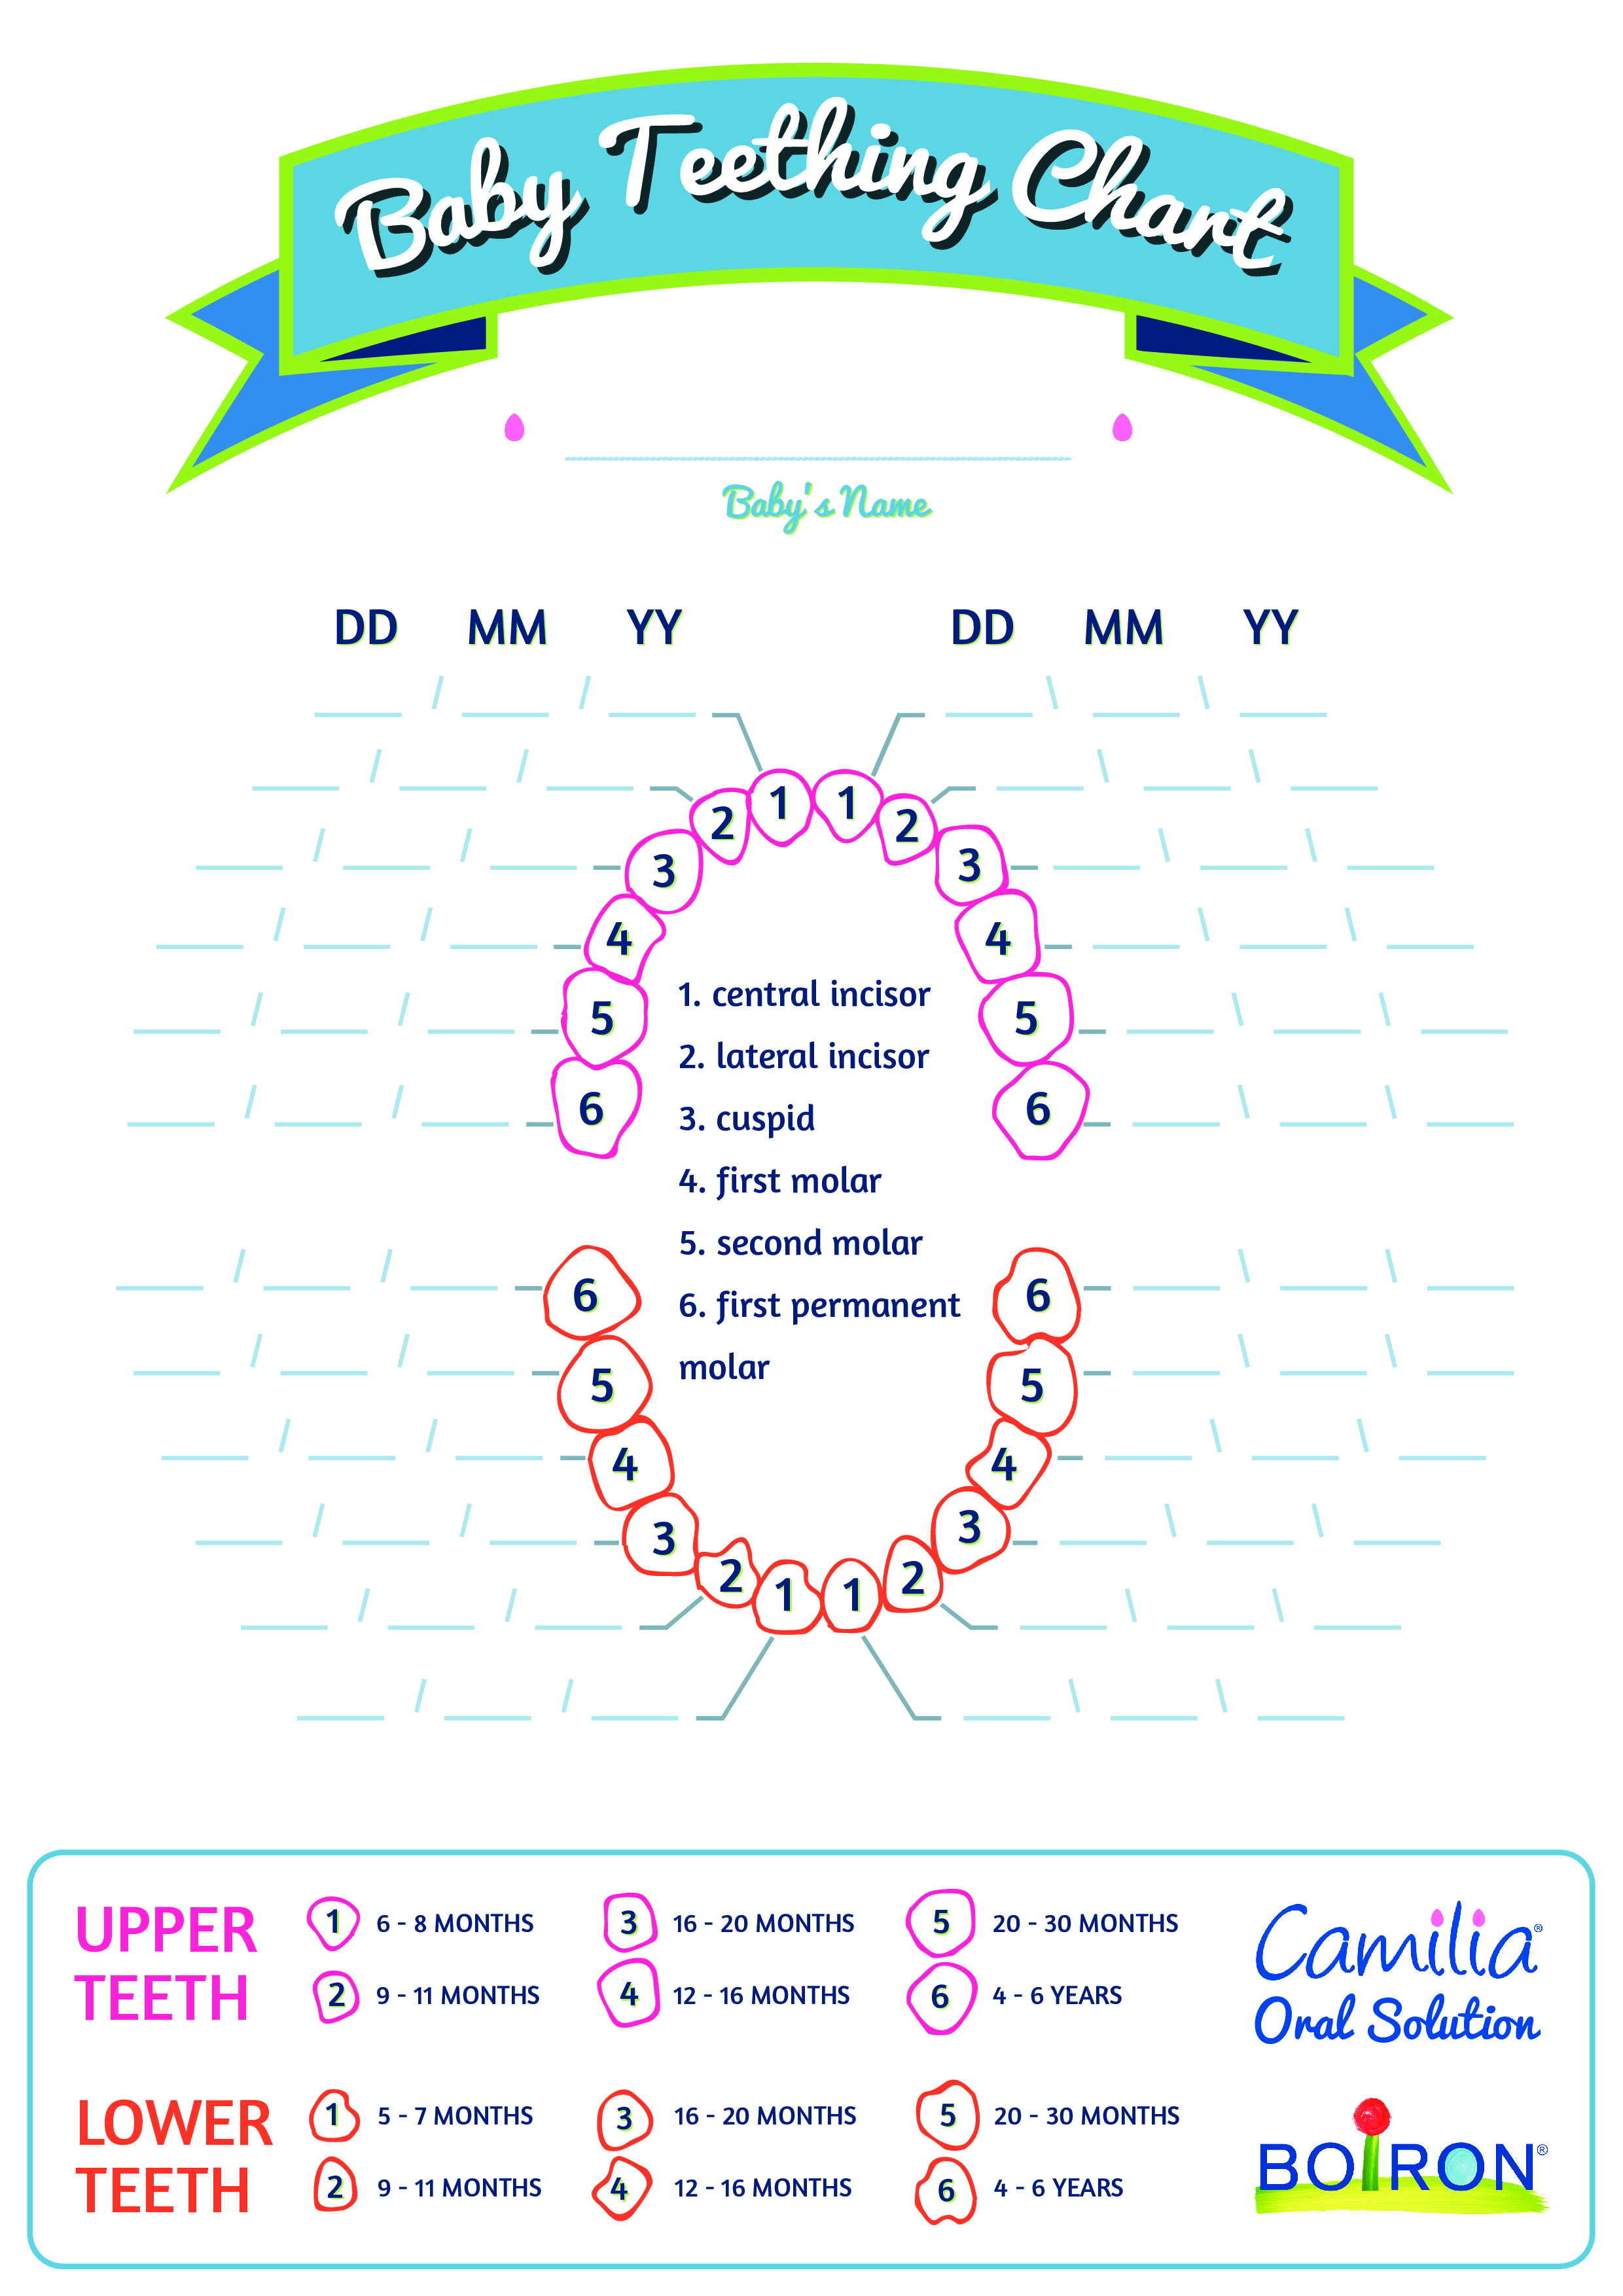 basic baby teething chart plantilla imagen principal